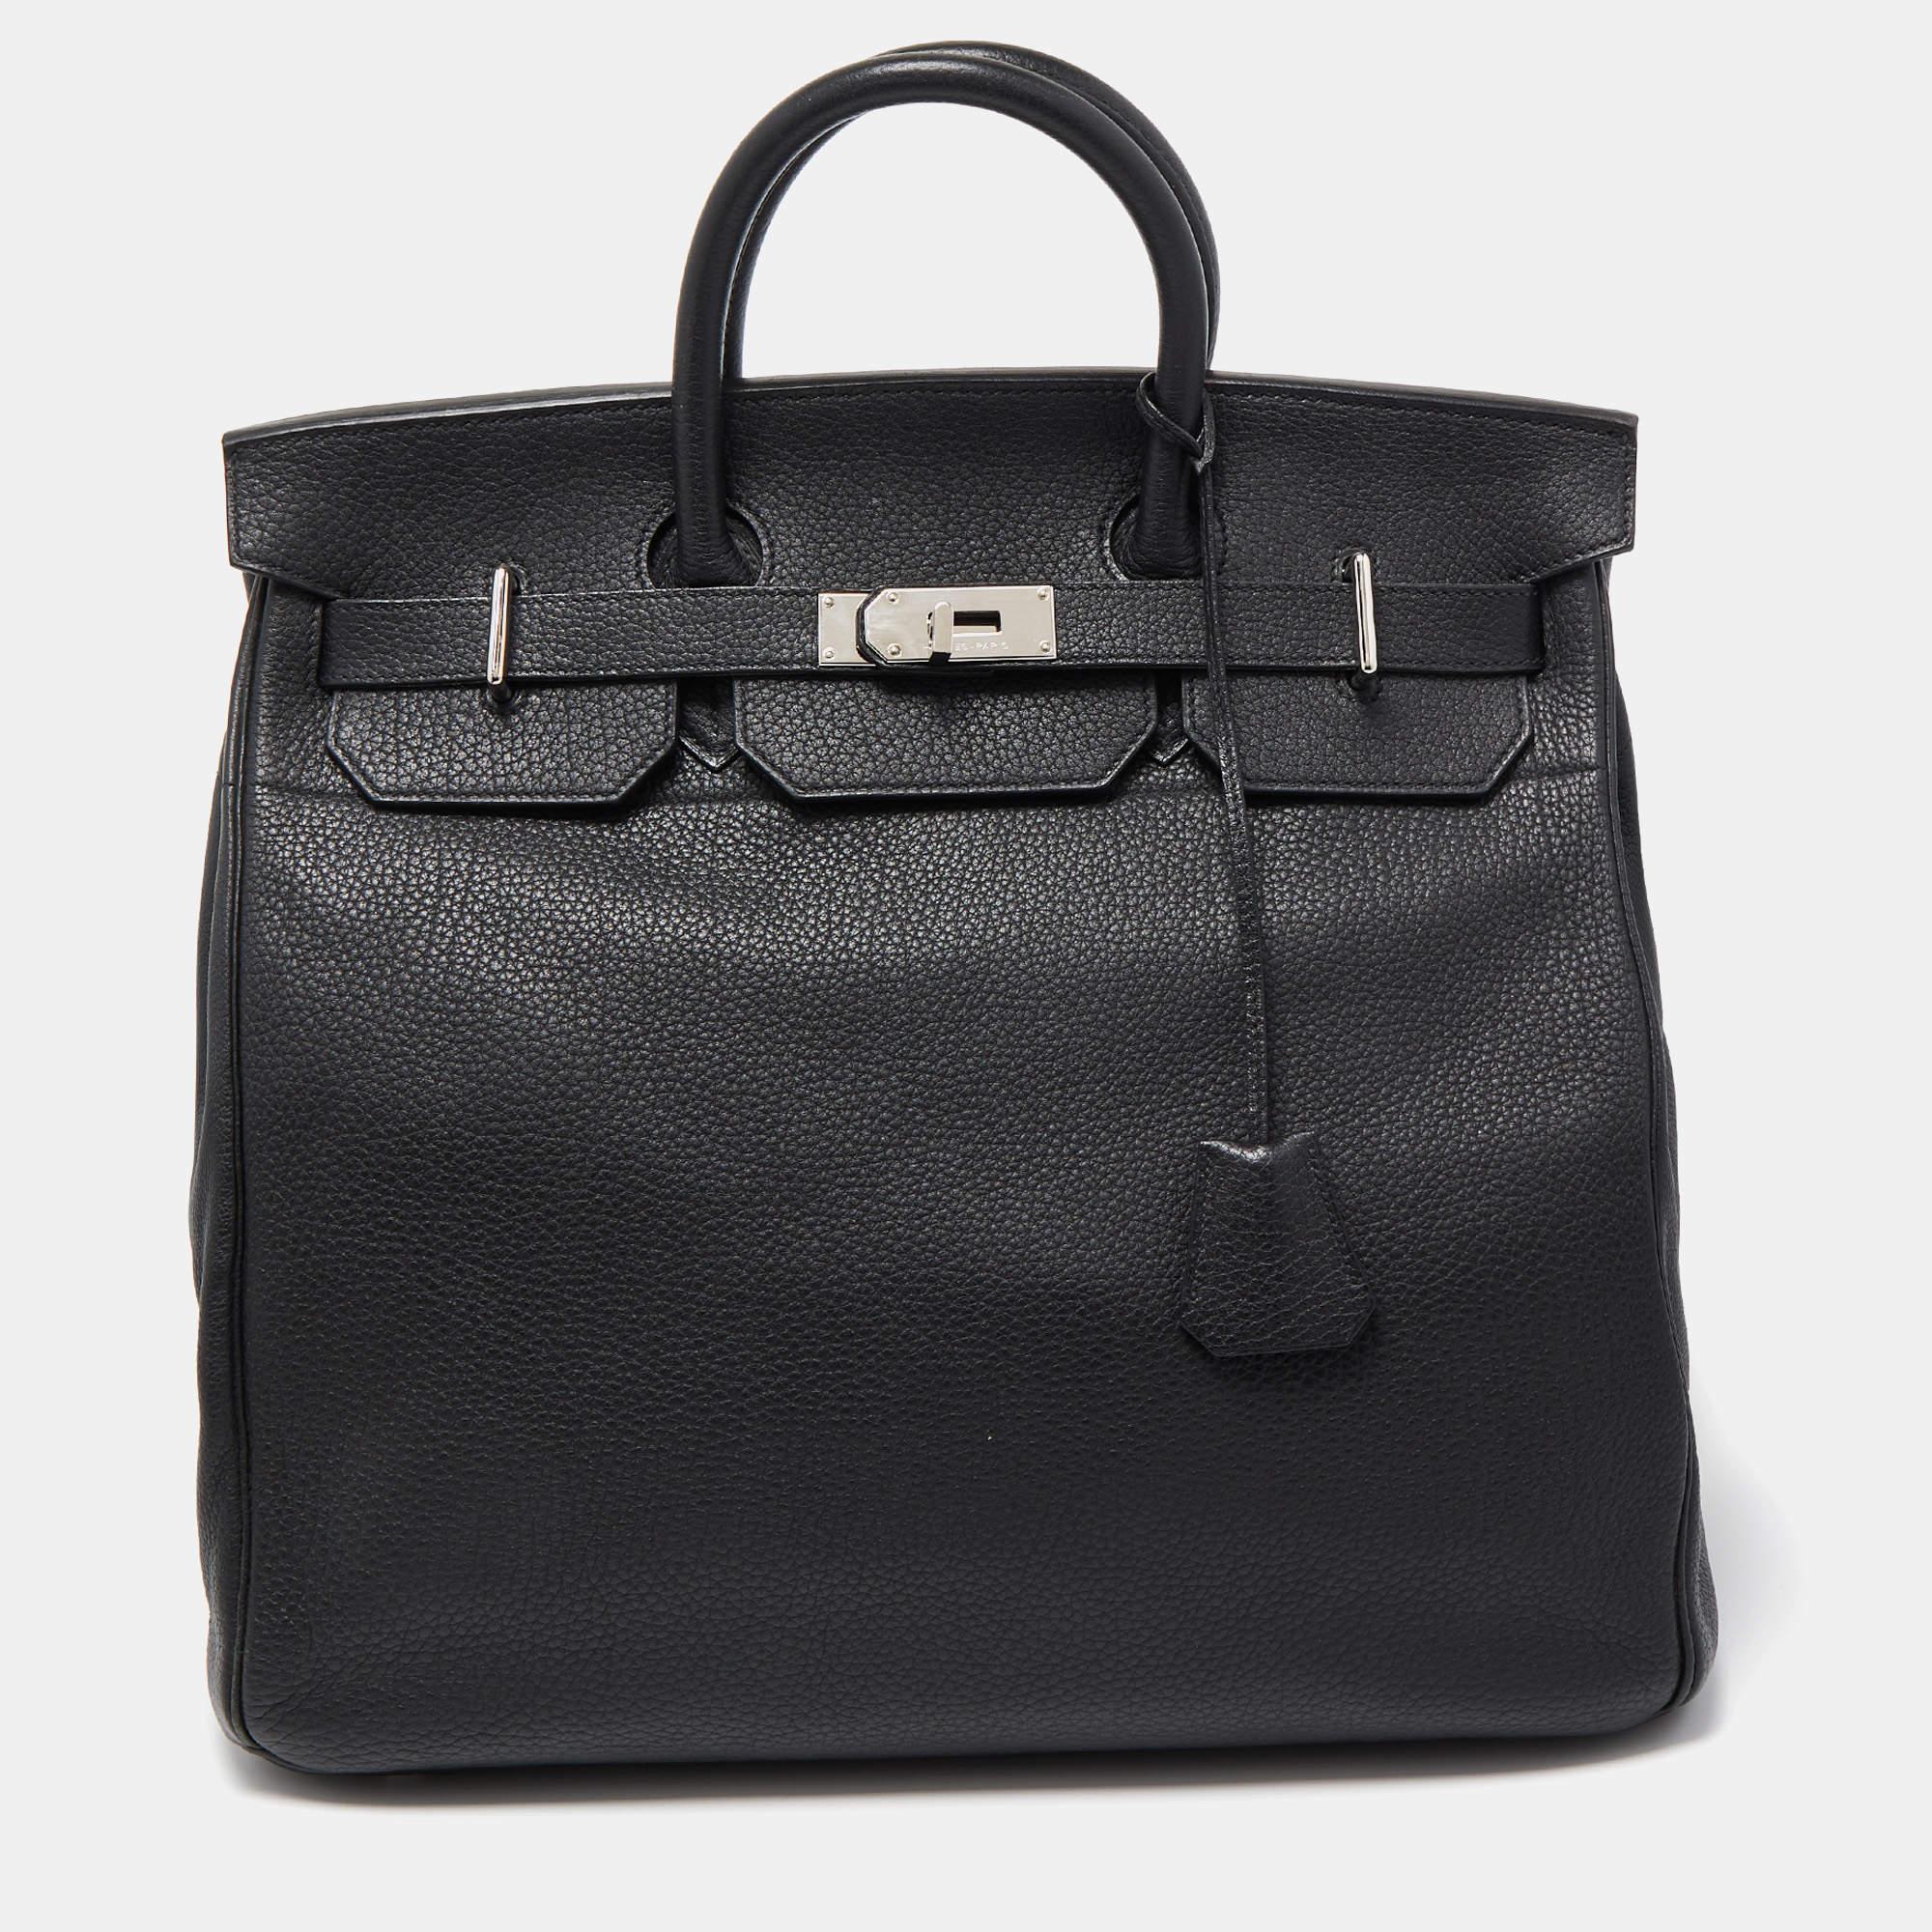 Hermes Black Togo Leather Palladium Plated HAC Birkin 40 Bag 3